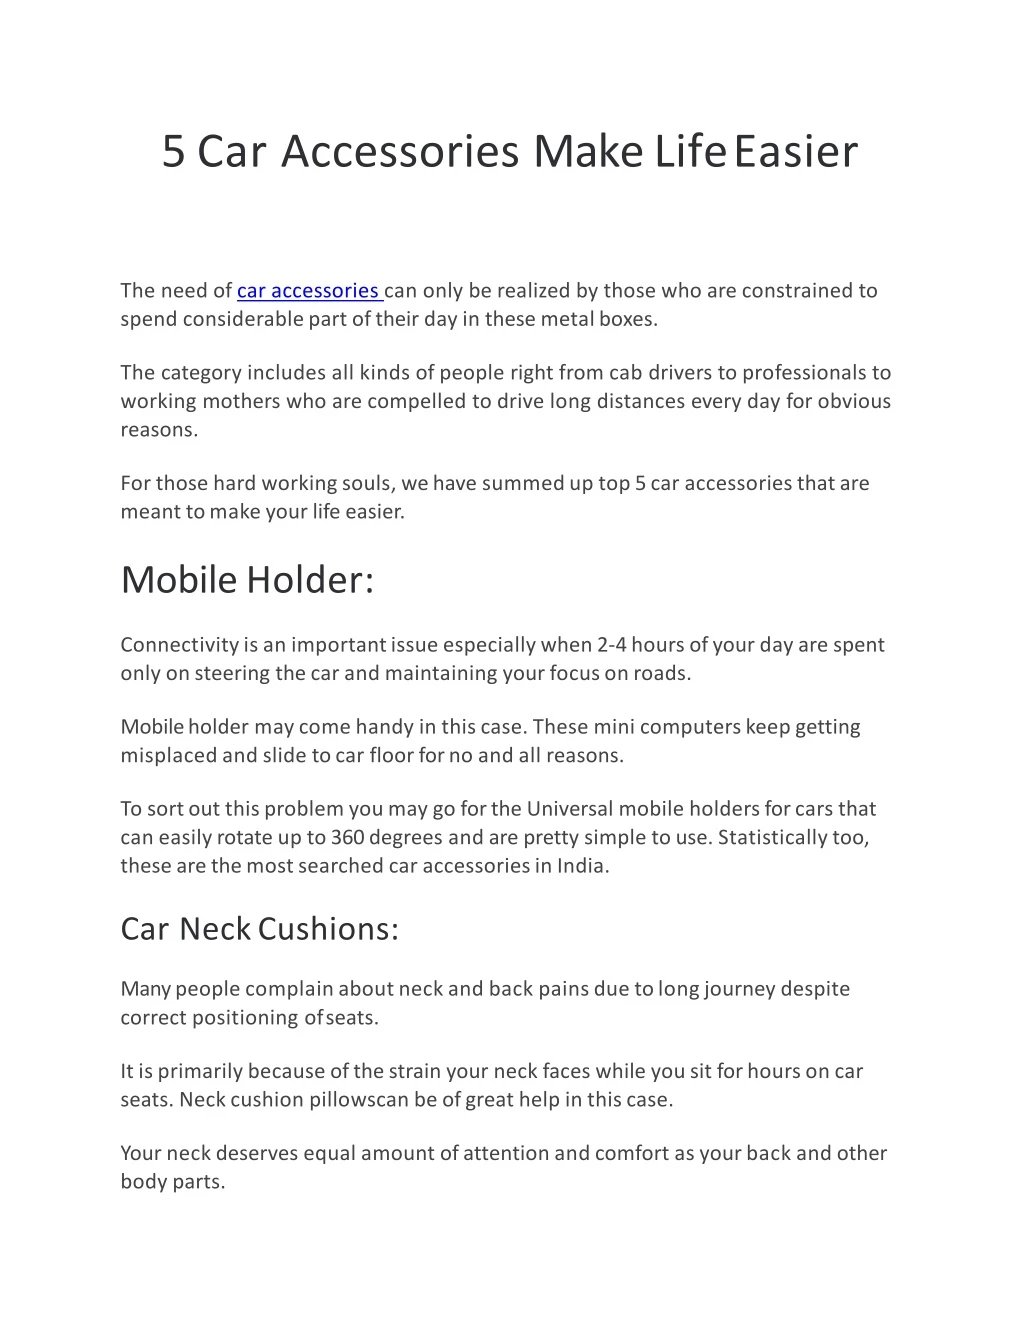 5 car accessories make life easier